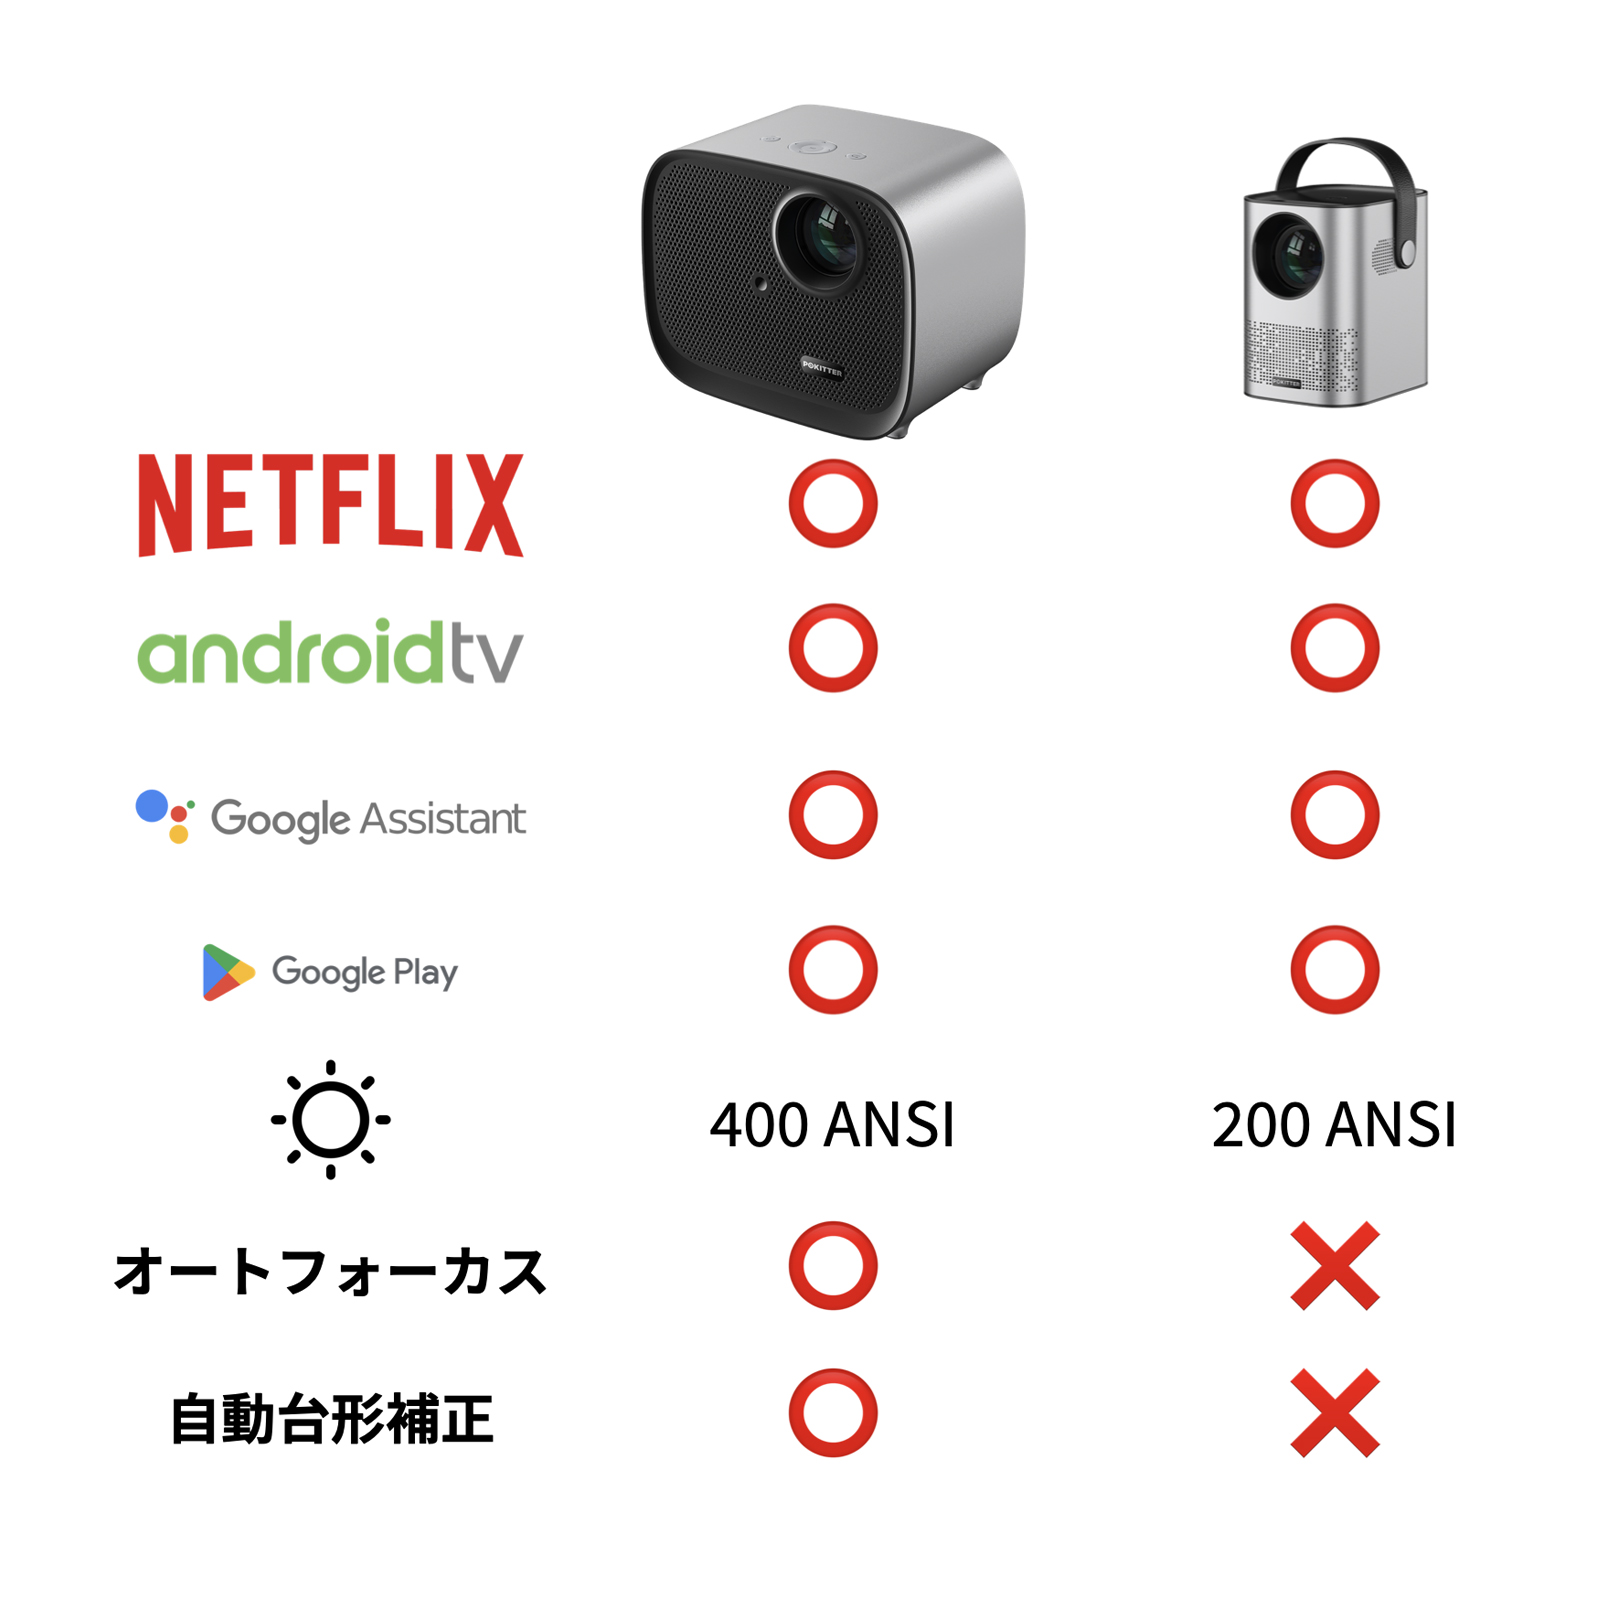 Pokitter Go Series Android TV Netflix搭載 プロジェクター レザー